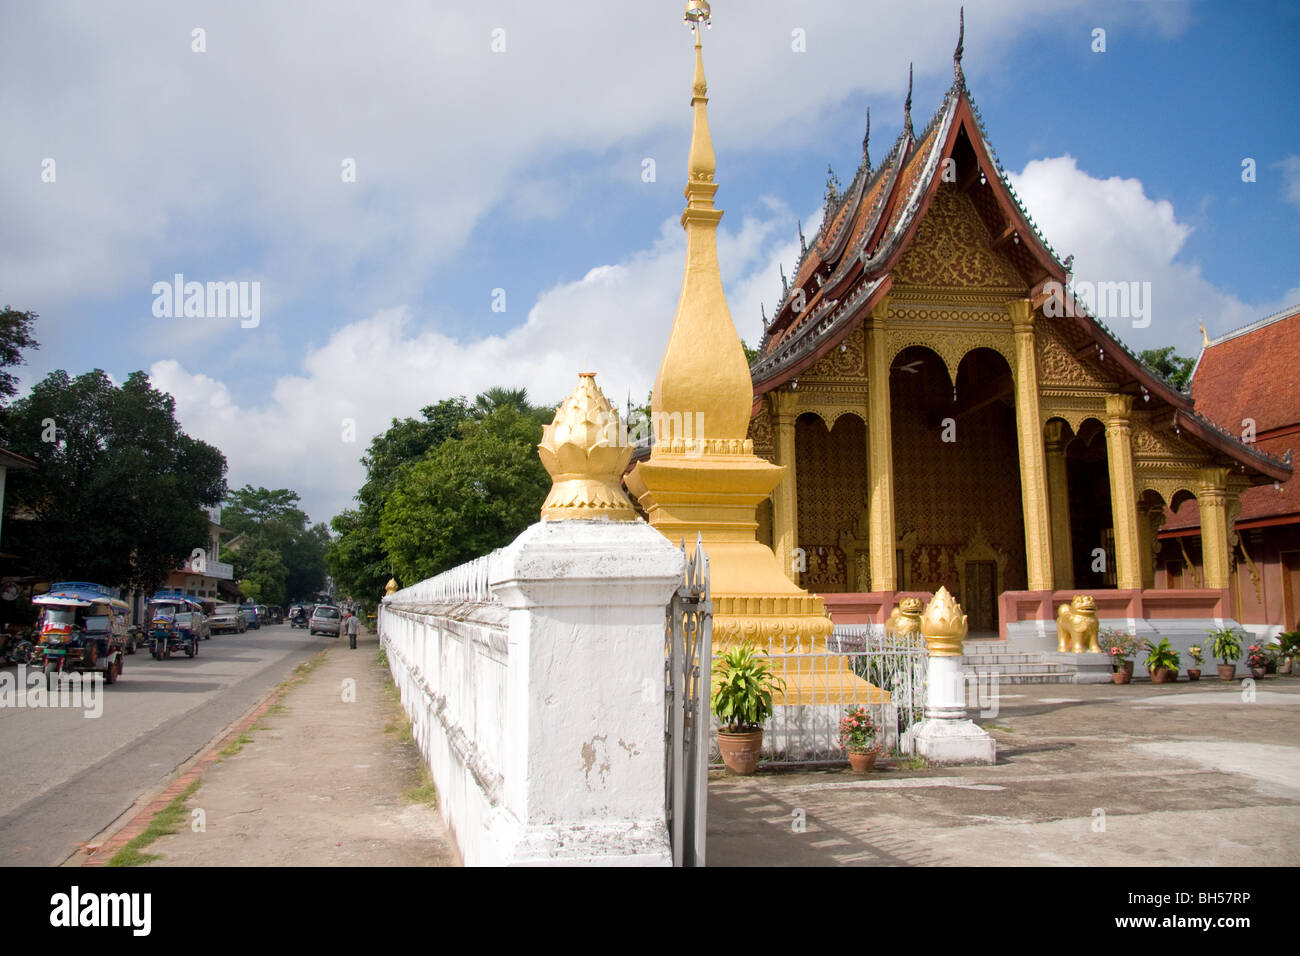 Wat Saen temple along the main Sakkaline road, Luang Prabang Stock Photo